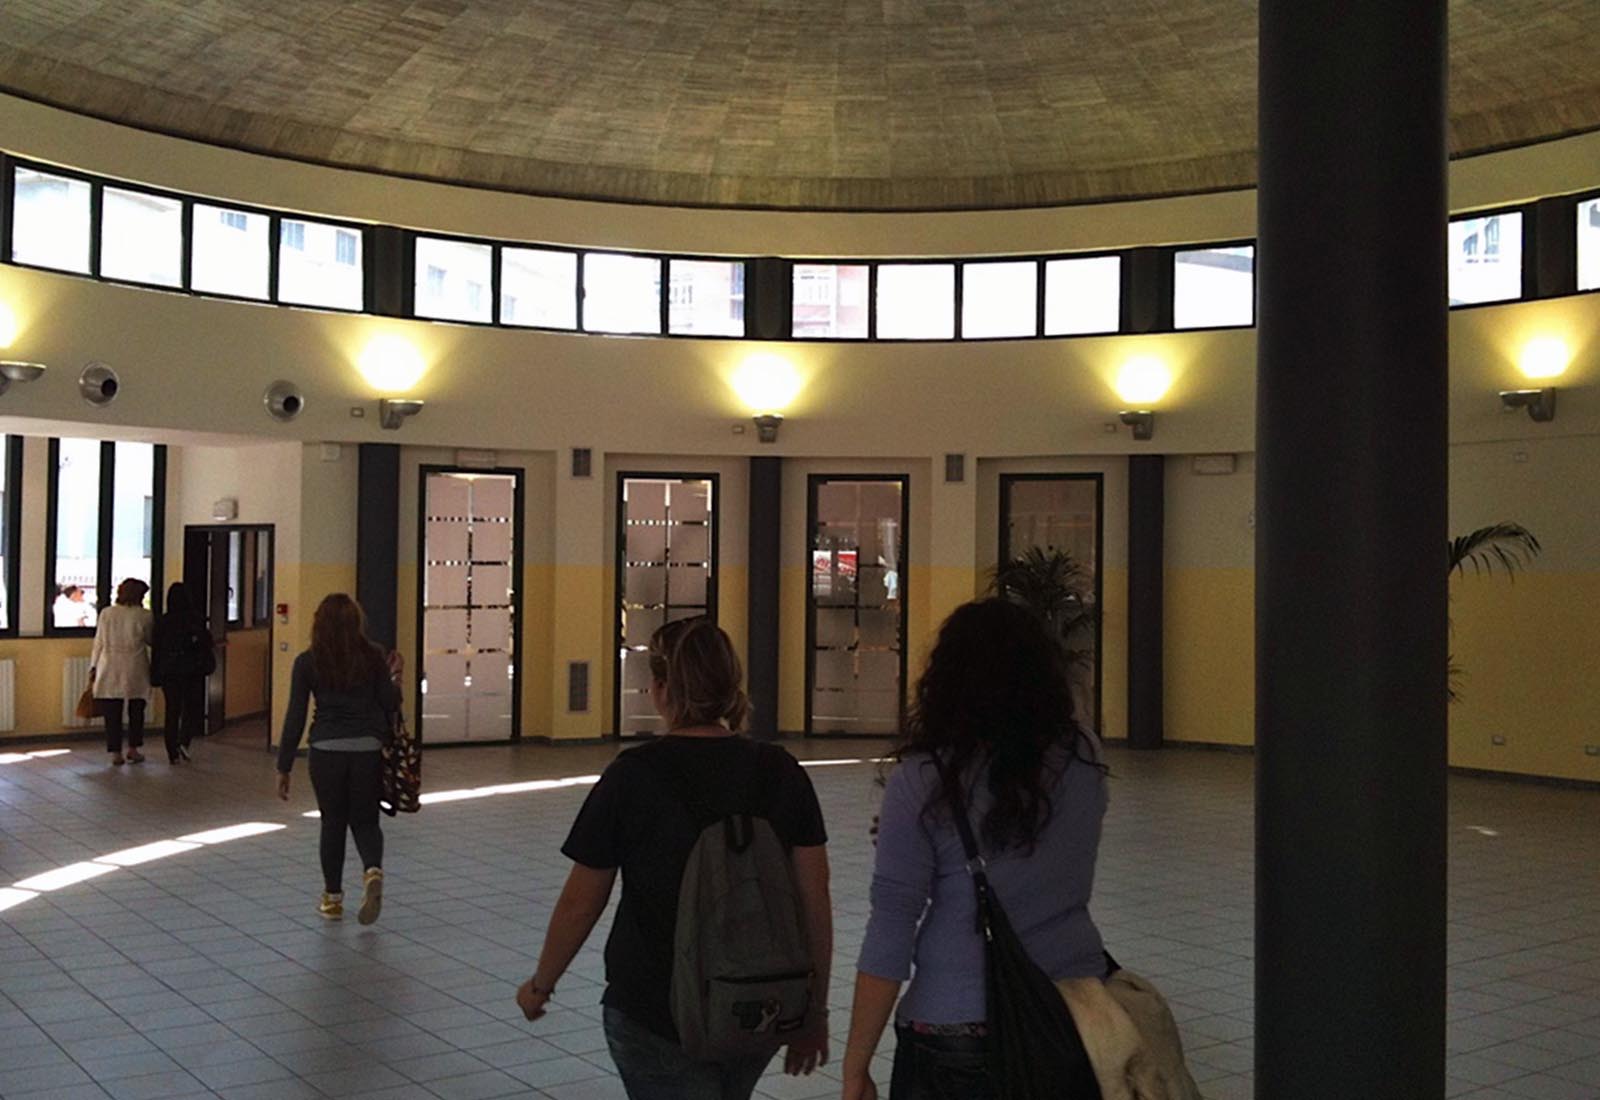 Manzoni school center in Milan - The circular classroom